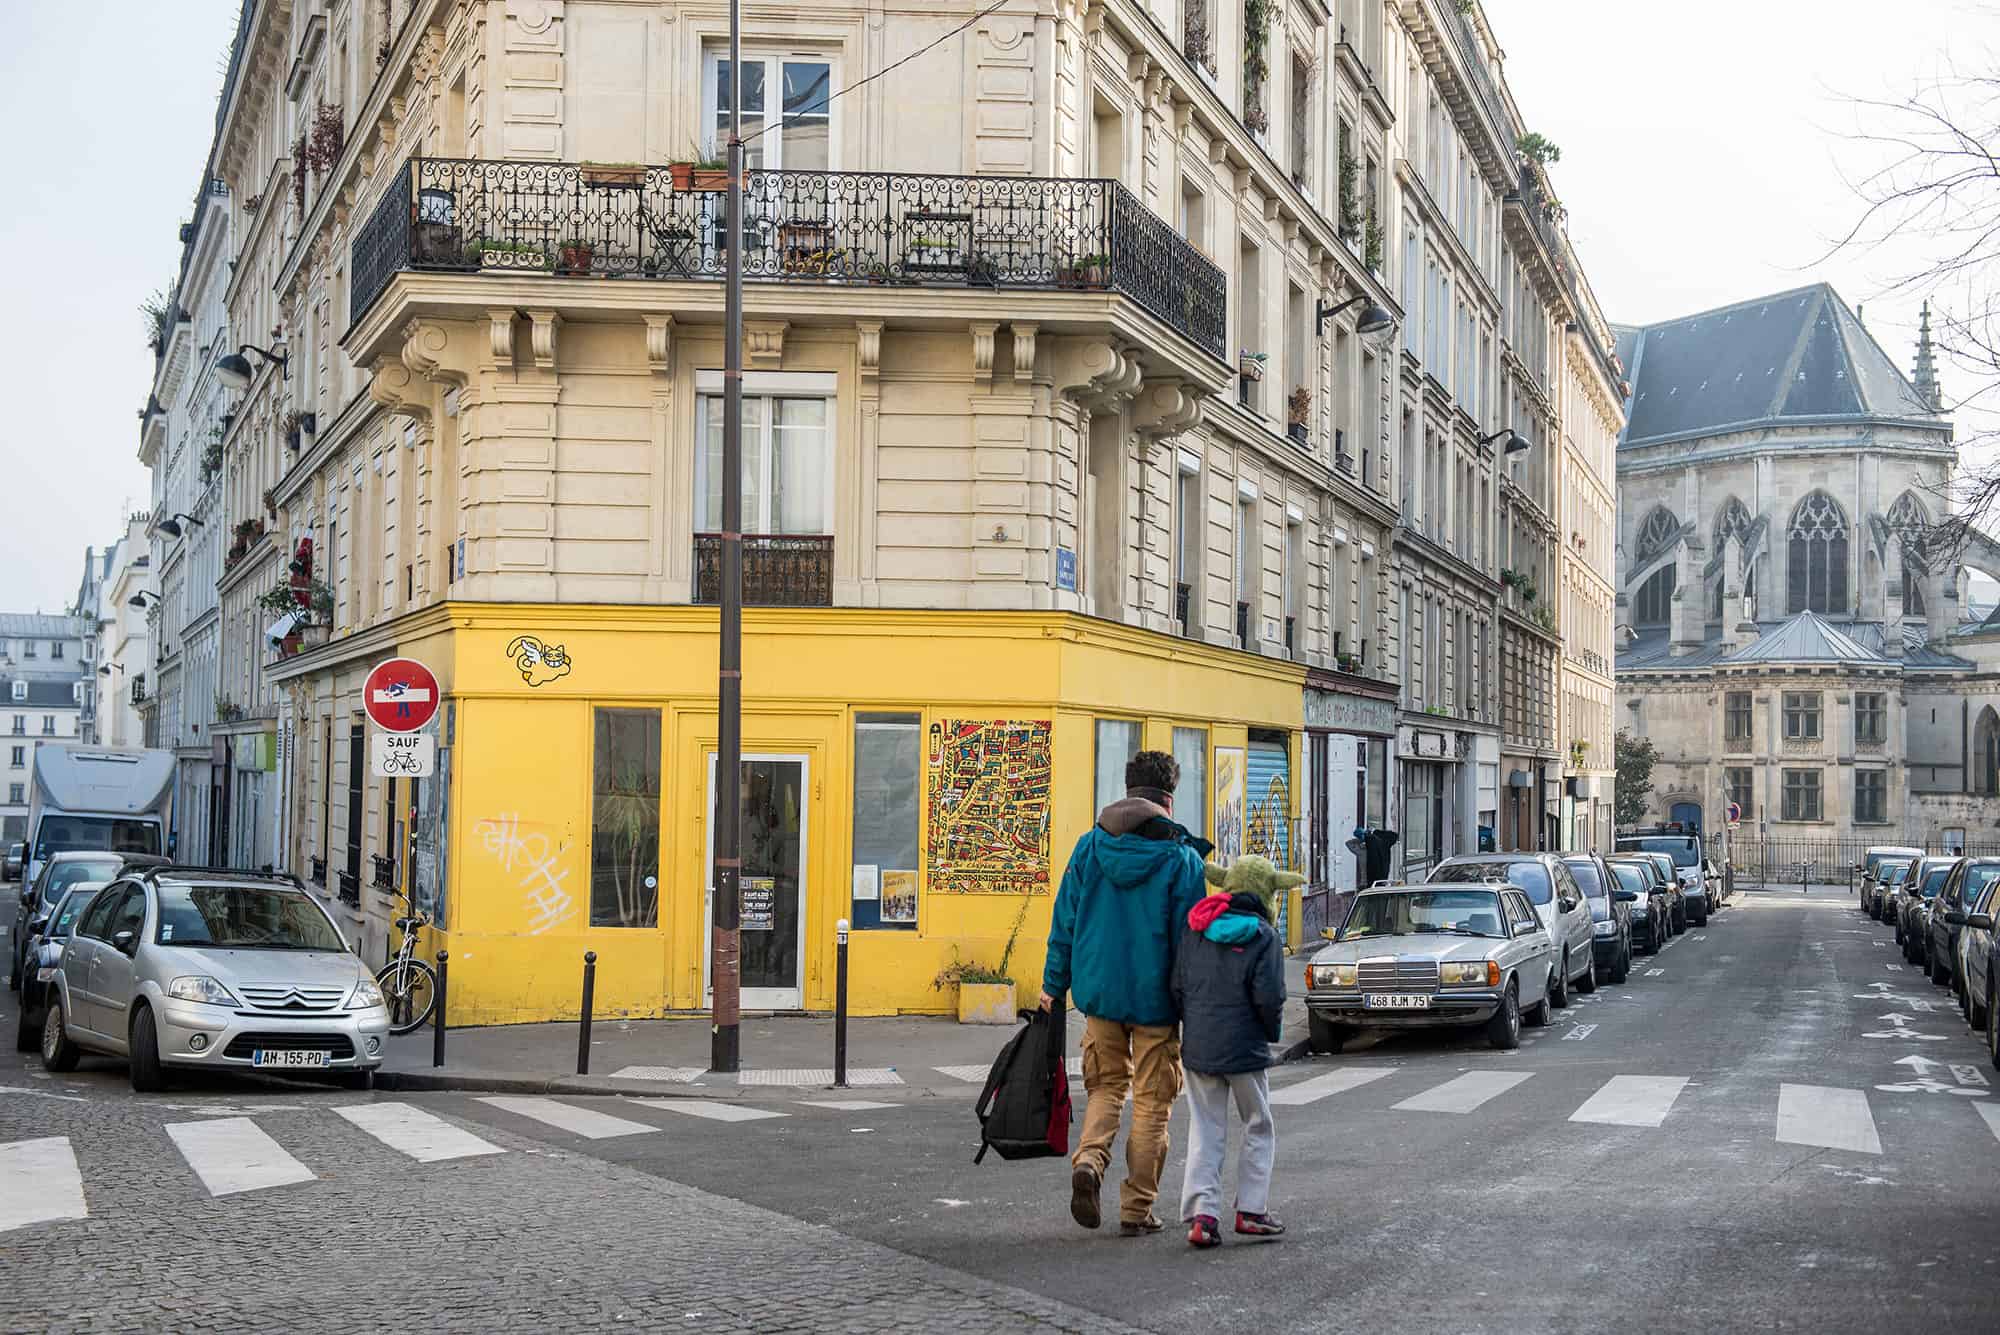 rue Myrha in the Goutte d'Or, Paris